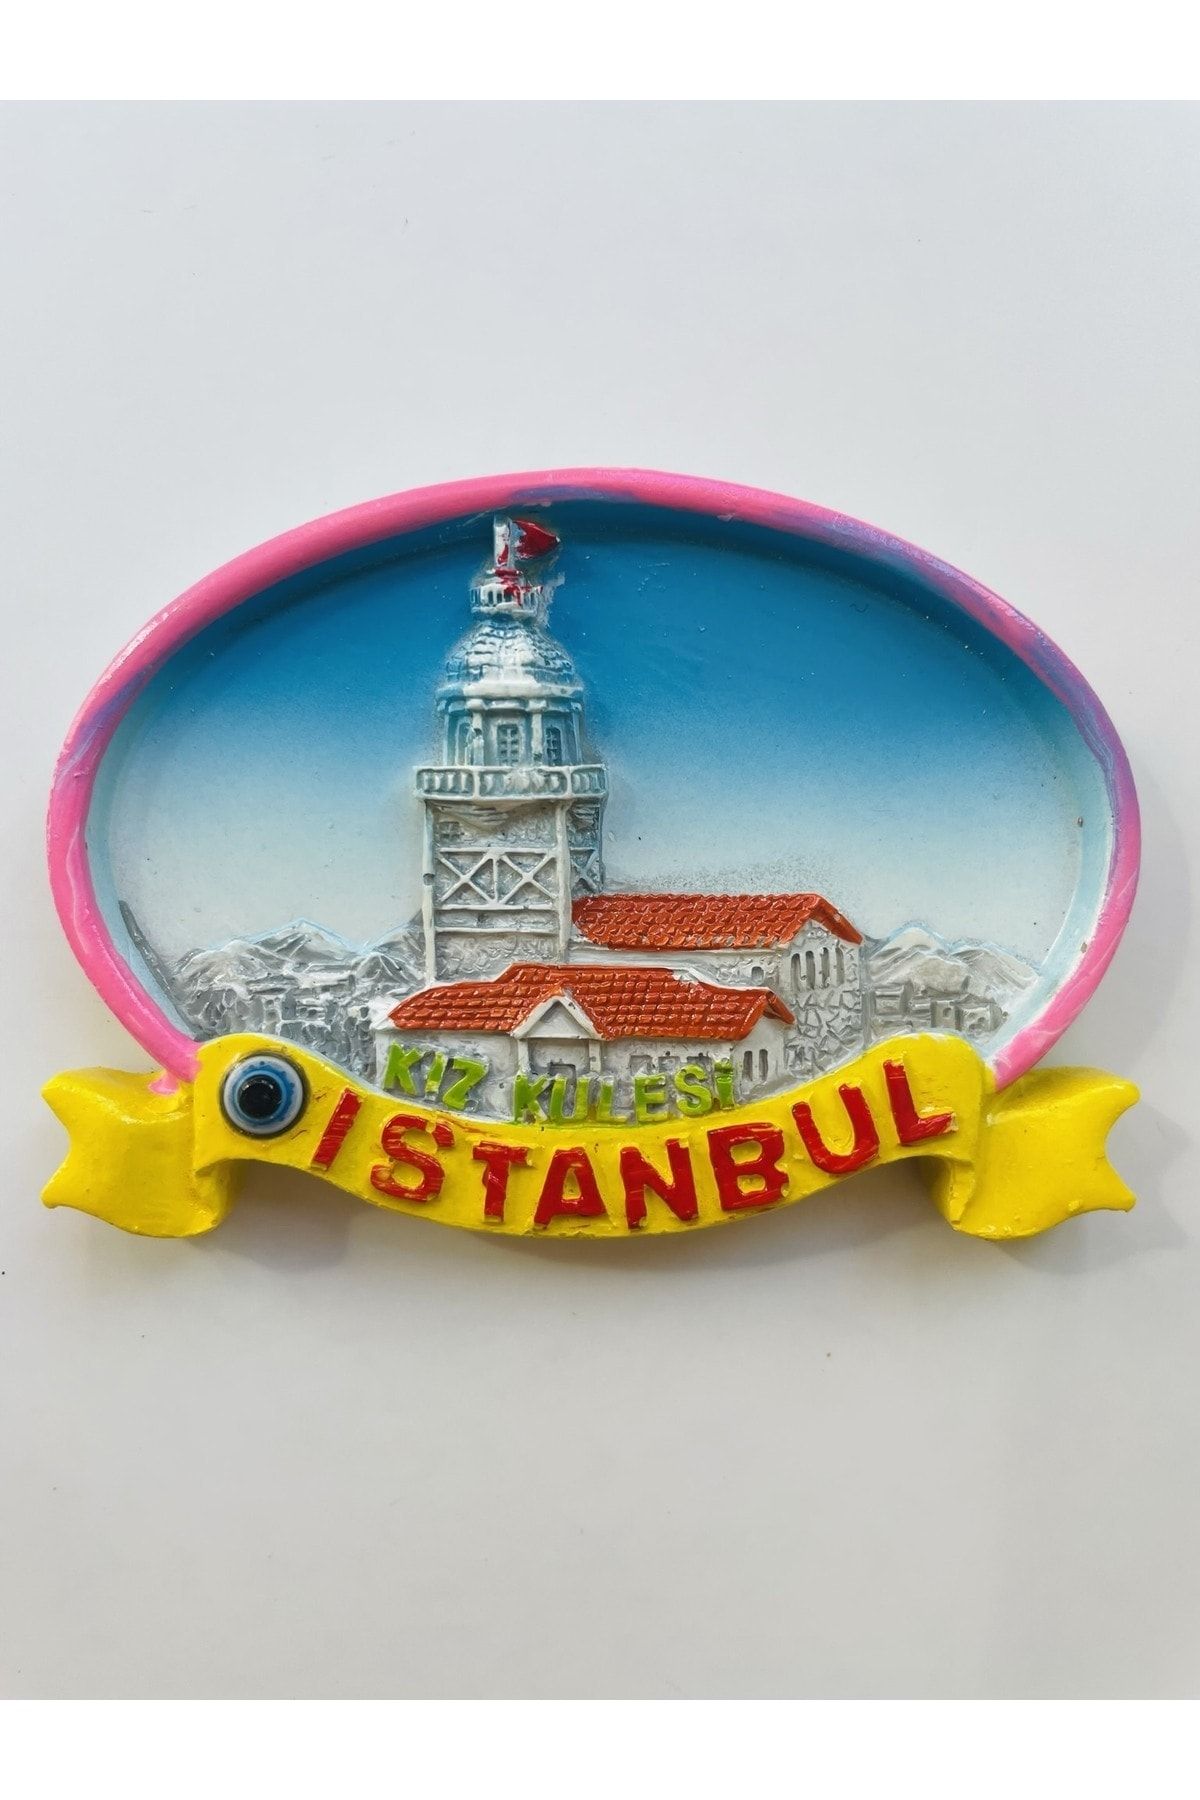 GALATA GIFT İstanbul Magnet, Galata, Kız Kulesi, Tramvay, Sultanahmet Temalı Buzdolabı Magneti